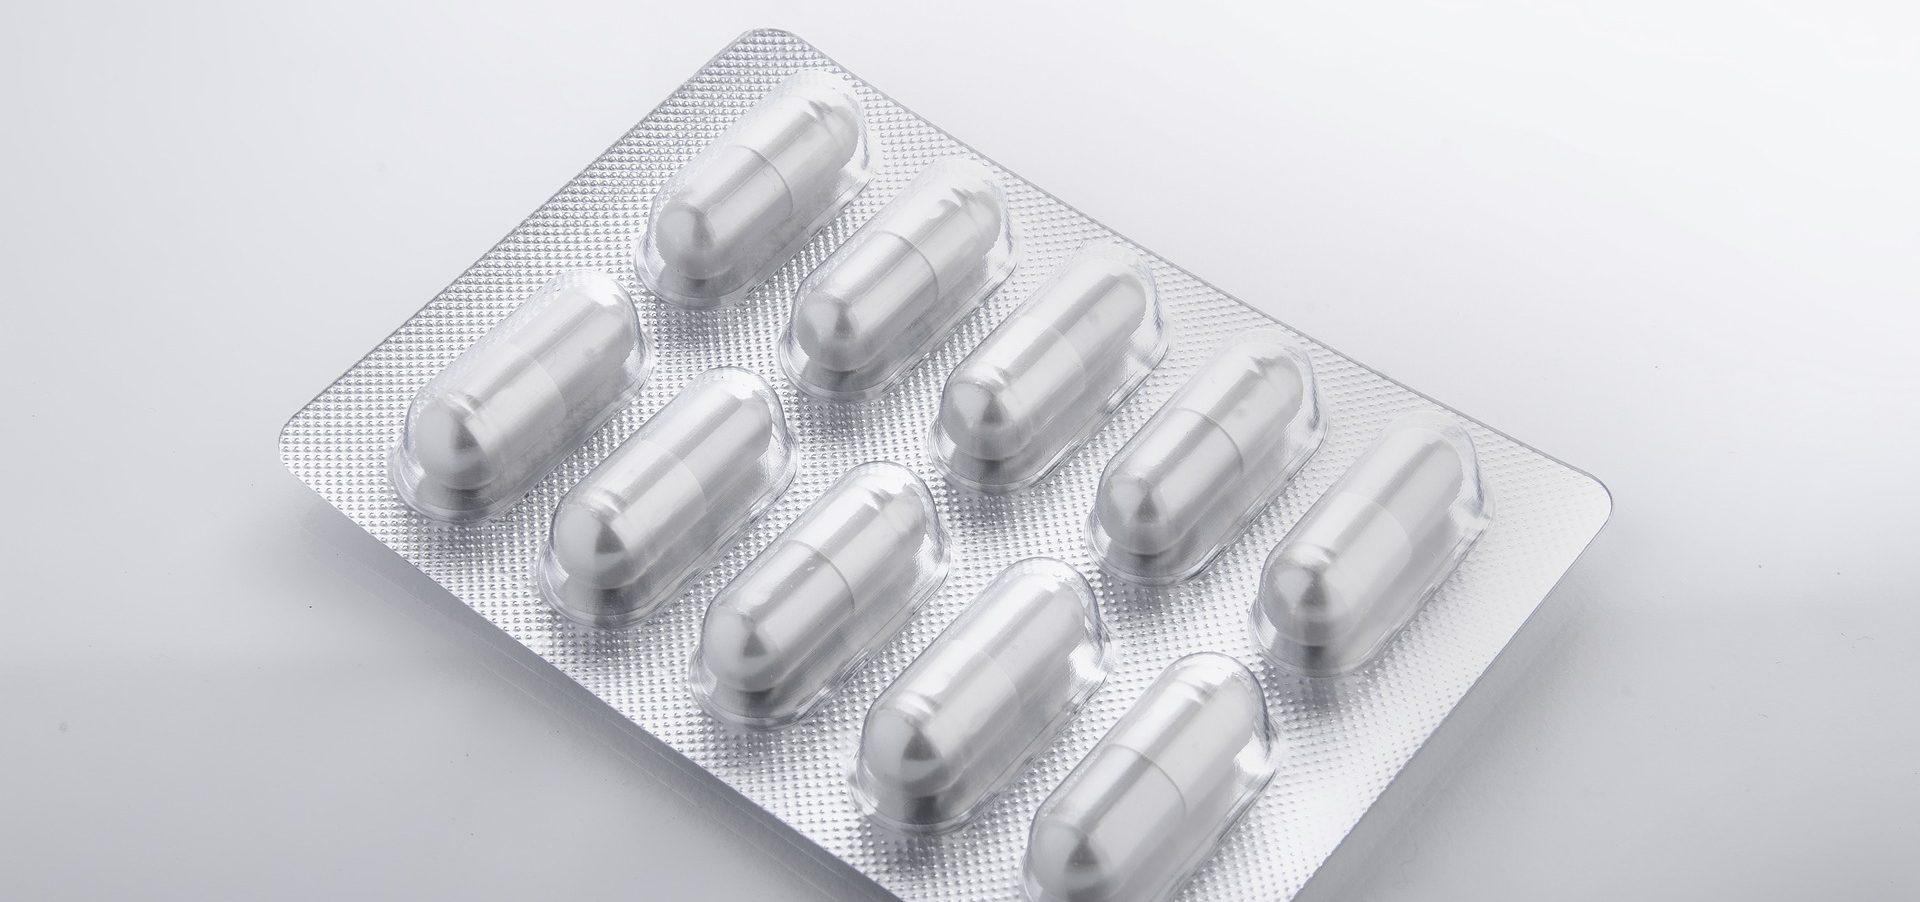 Cofepris alerta sobre falsificación de Plaquenil, medicamento con hidroxicloroquina